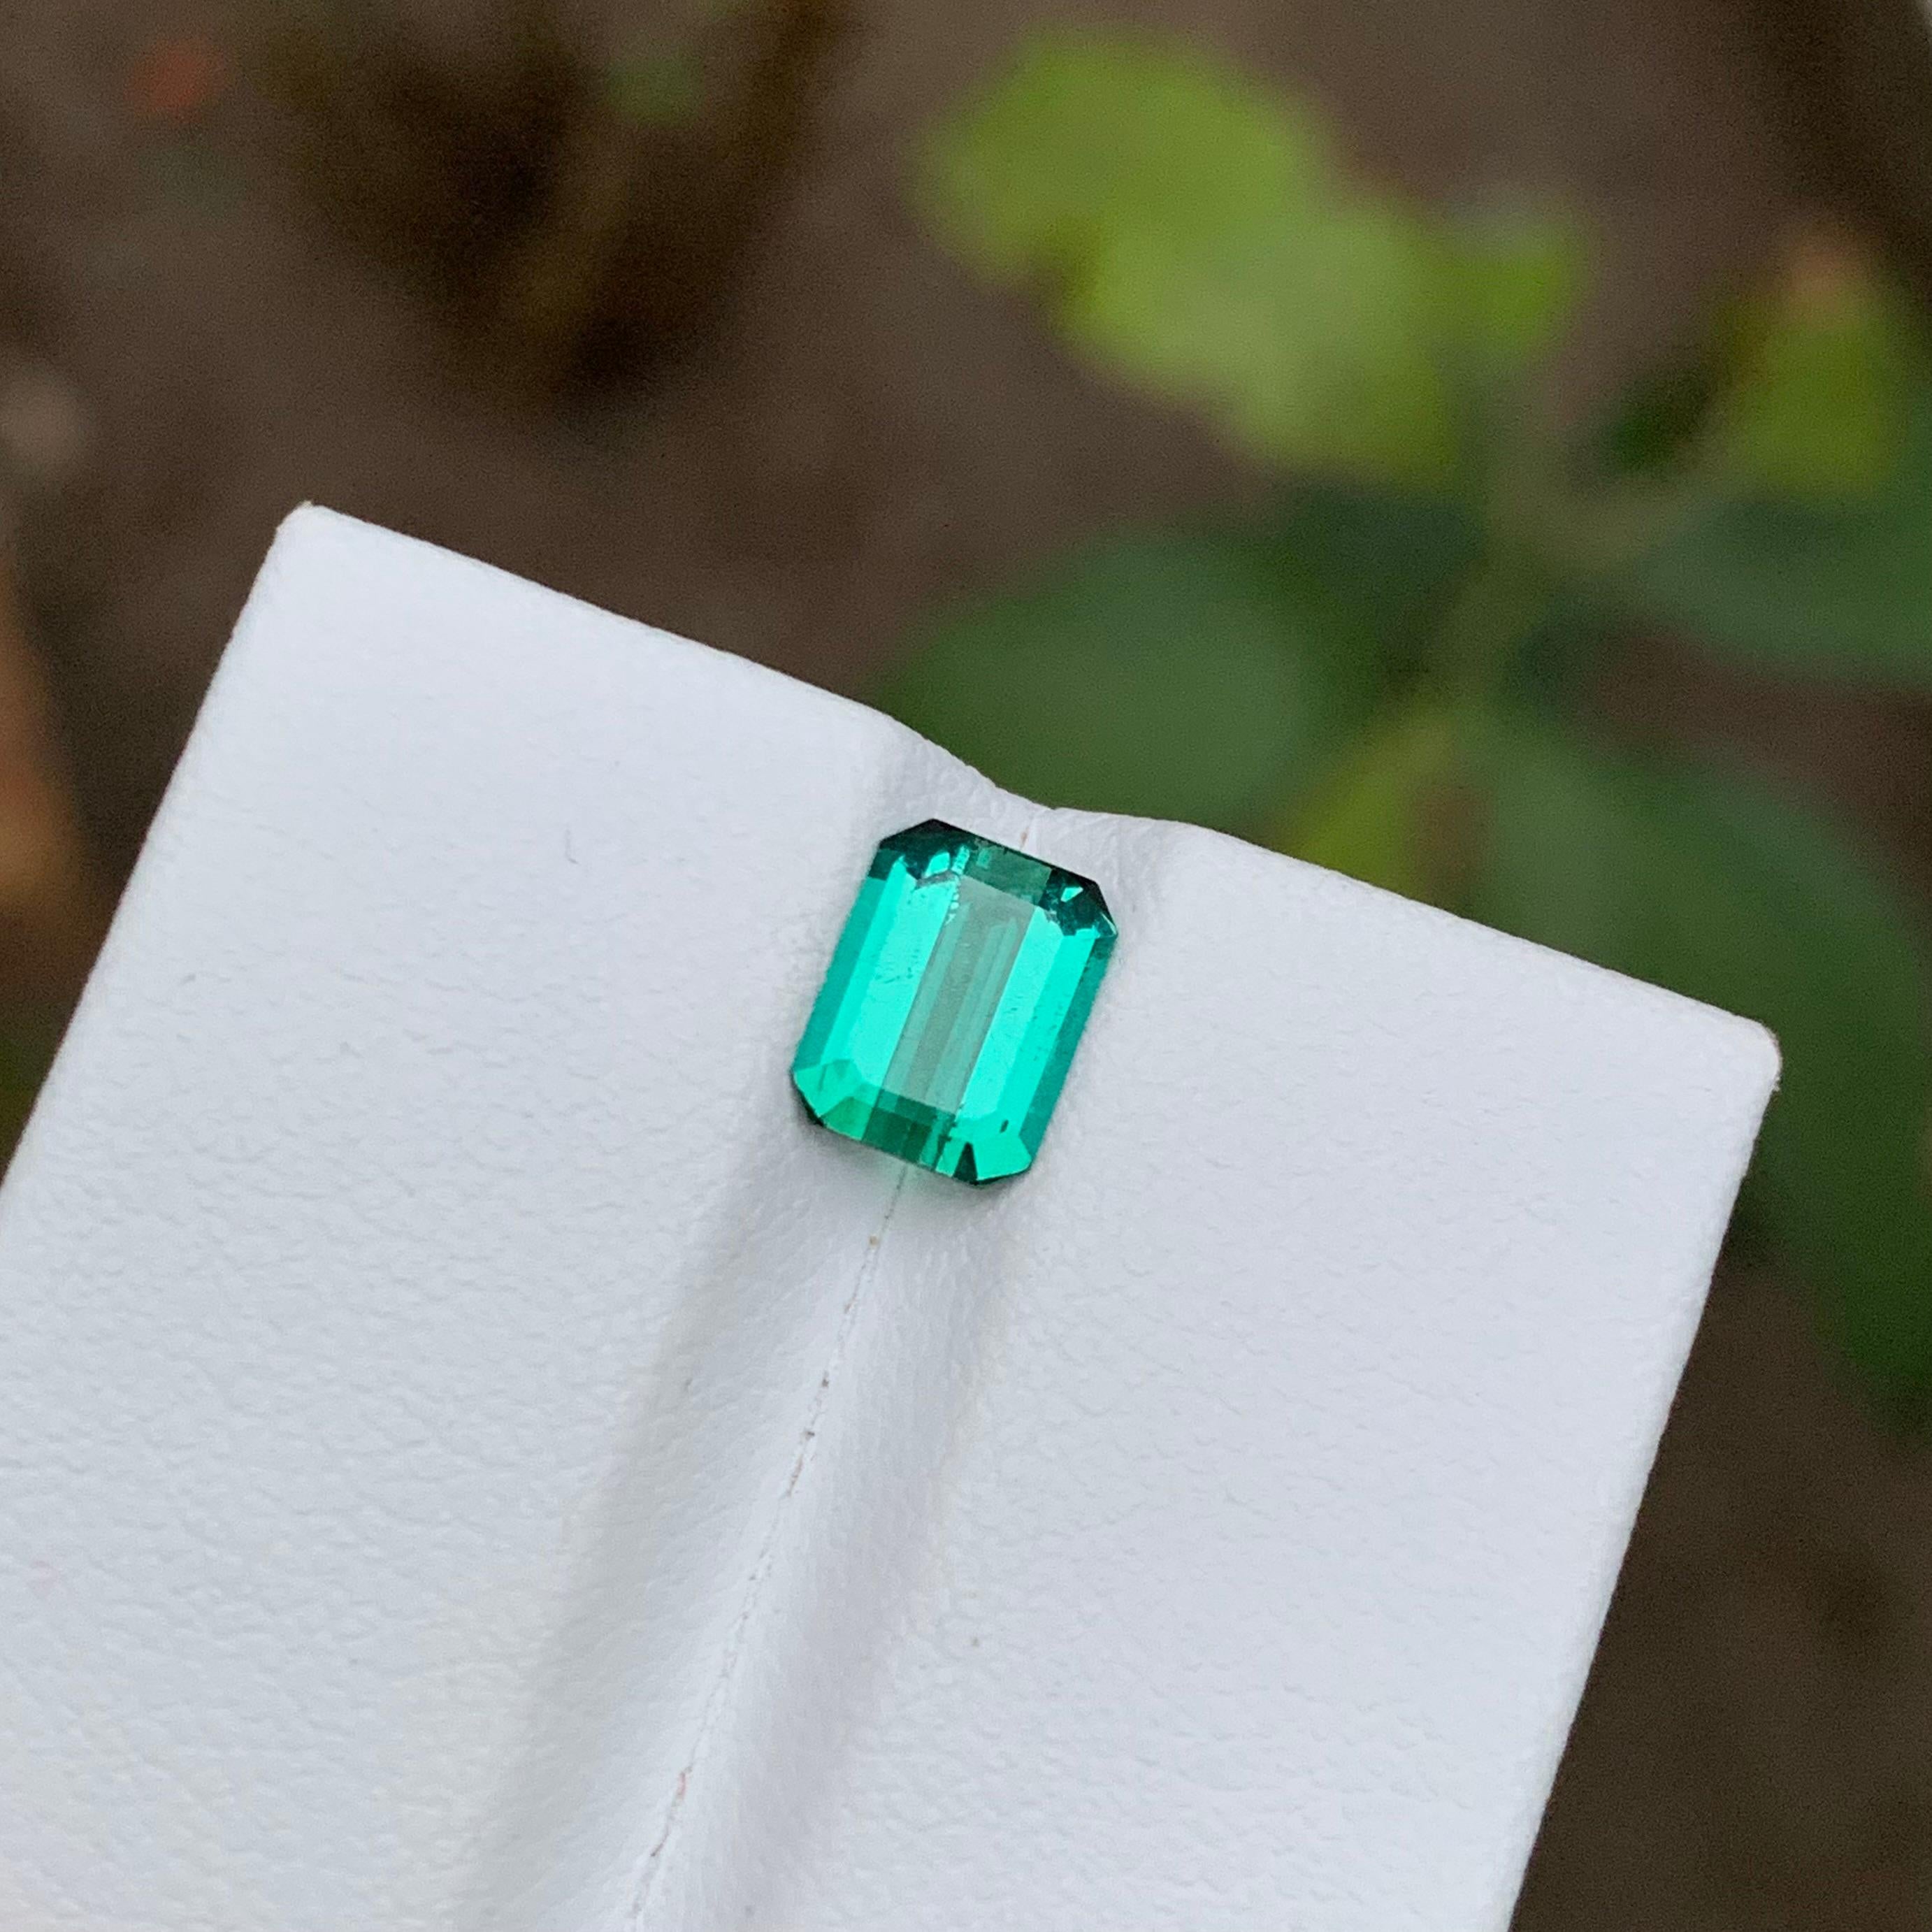 Rare Vibrant Bluish Neon Green Tourmaline Gemstone, 1.35 Ct Emerald Cut for Ring For Sale 3